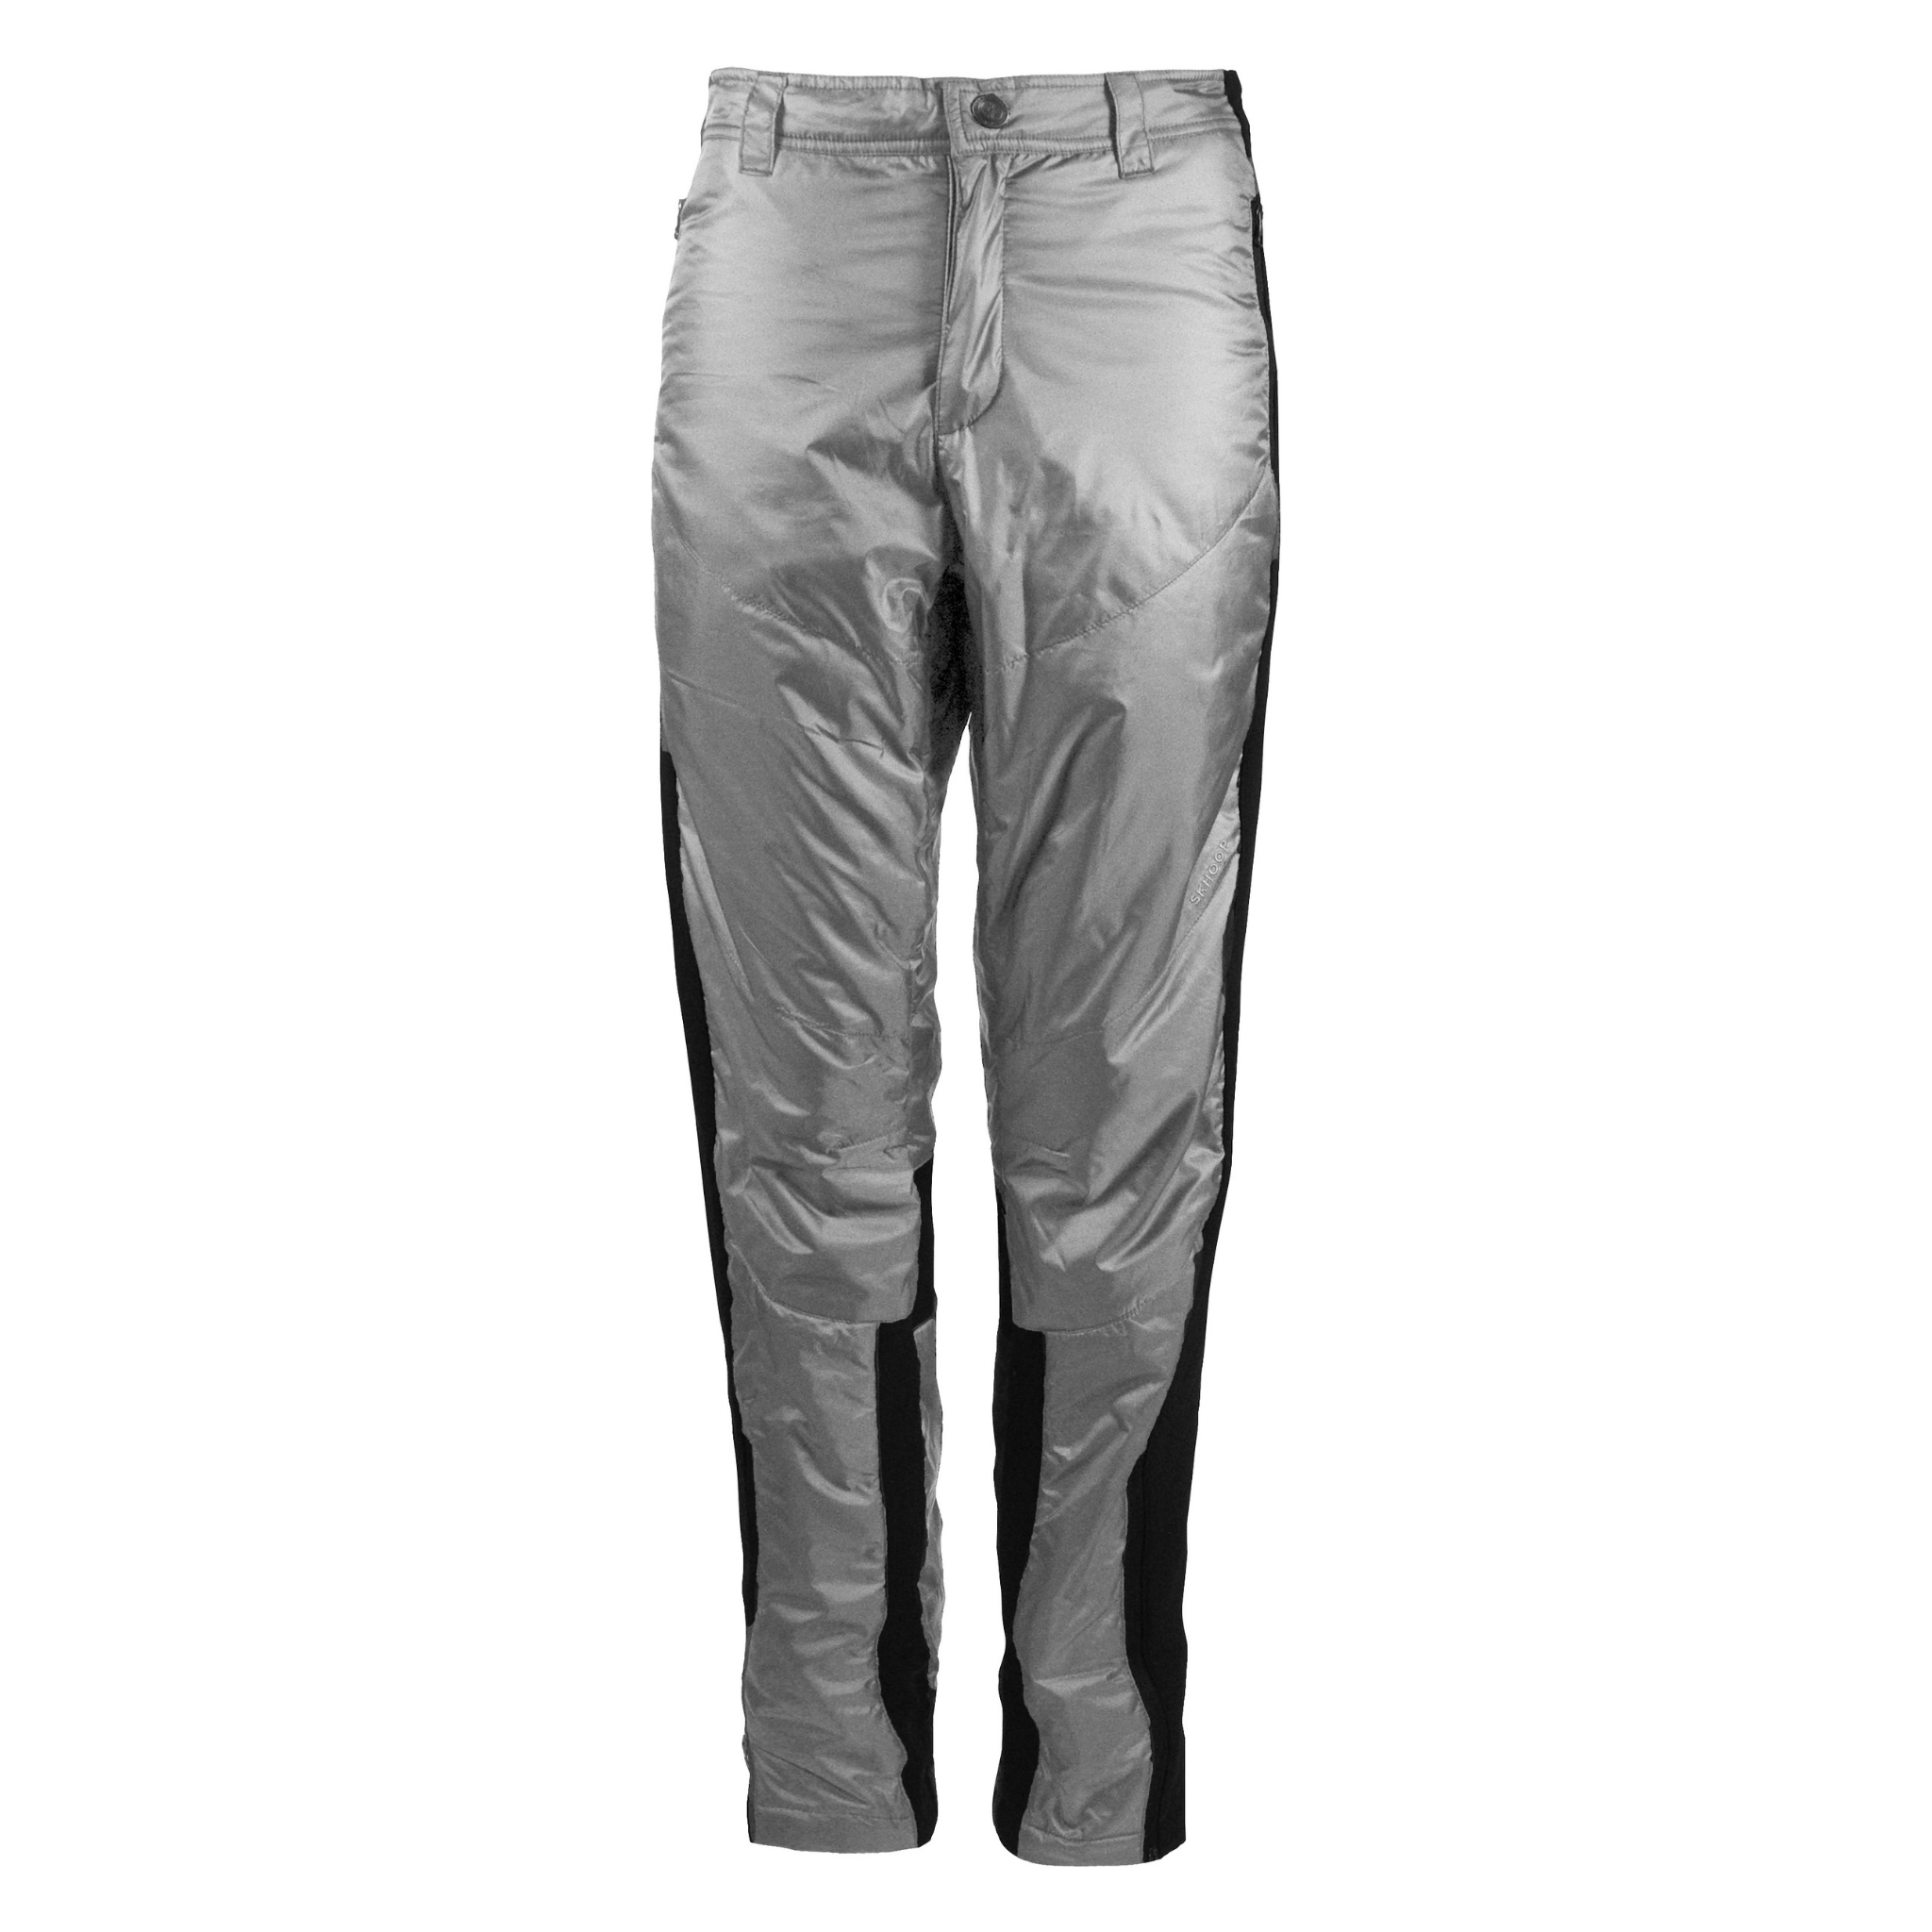 Thermal Skinny Outdoor Pants - Graphite